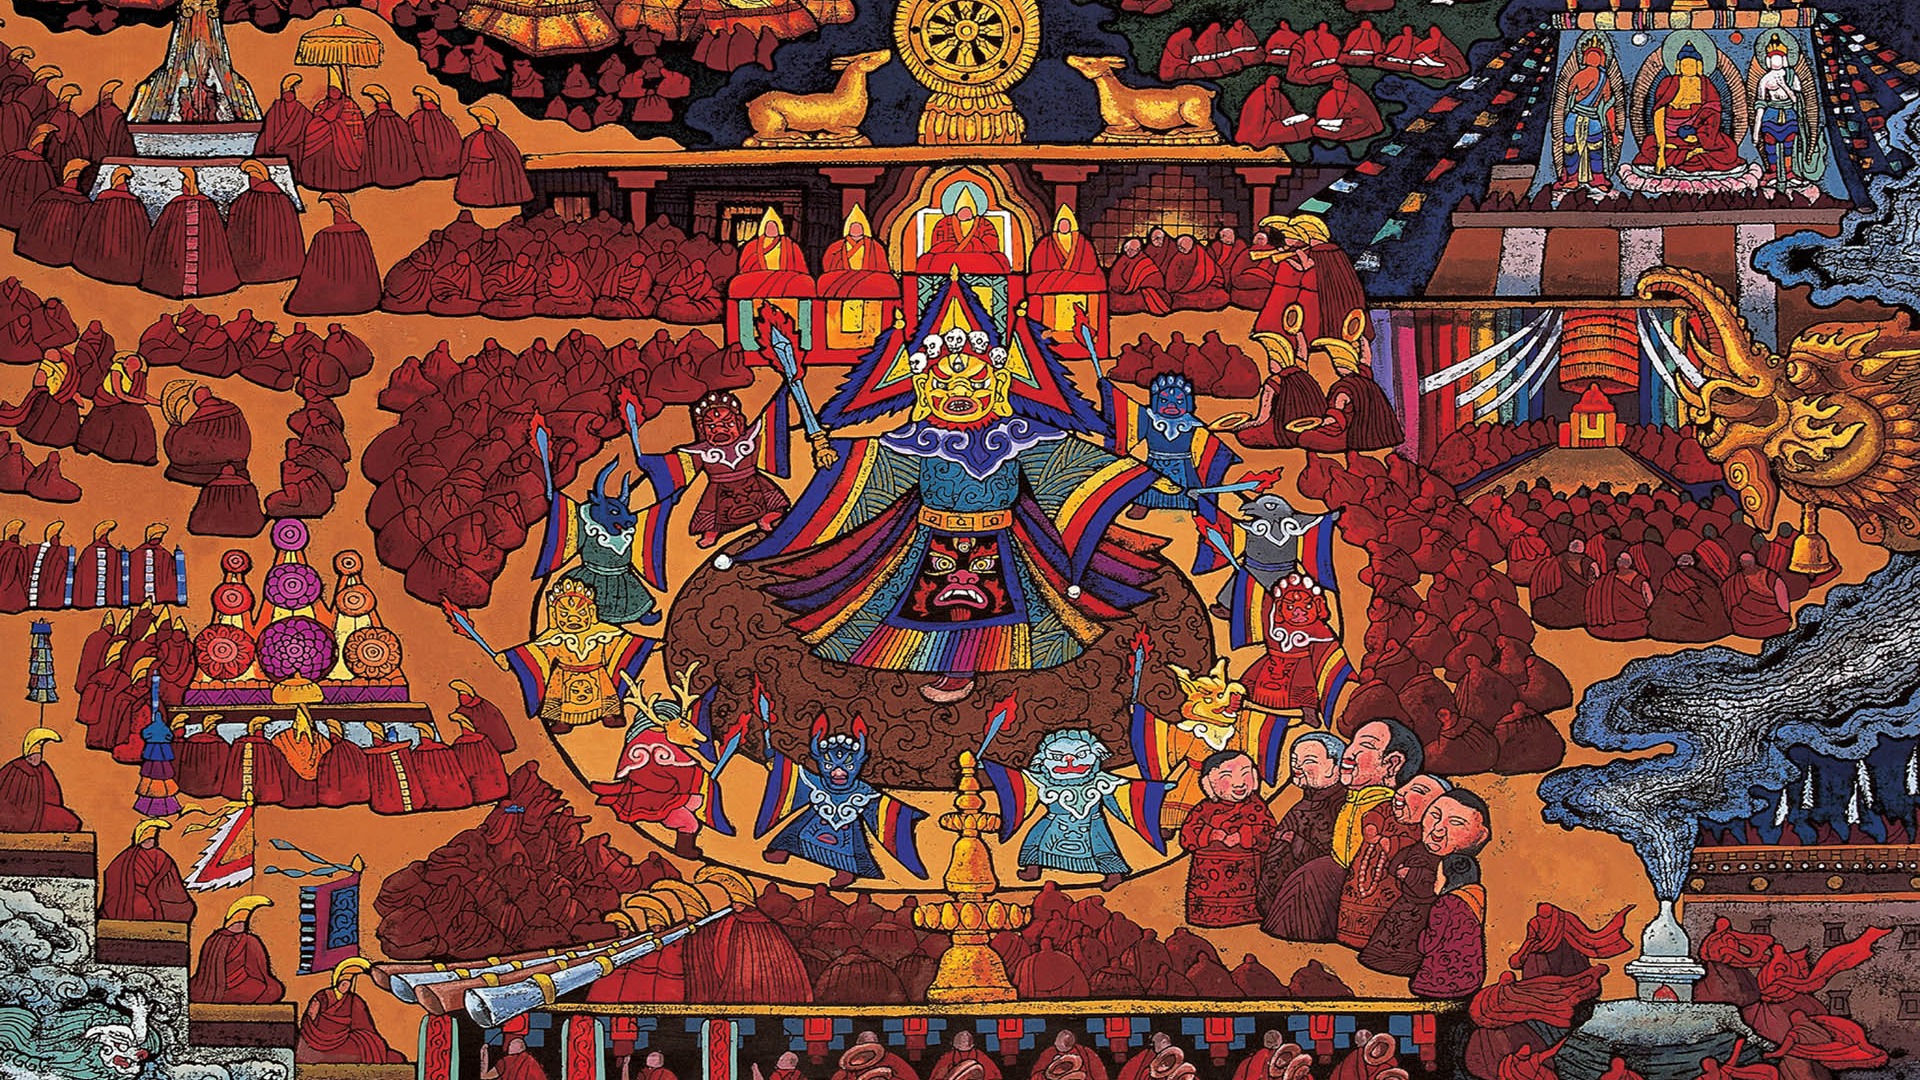 Cheung Pakistan fond d'écran d'impression du Tibet (2) #19 - 1920x1080